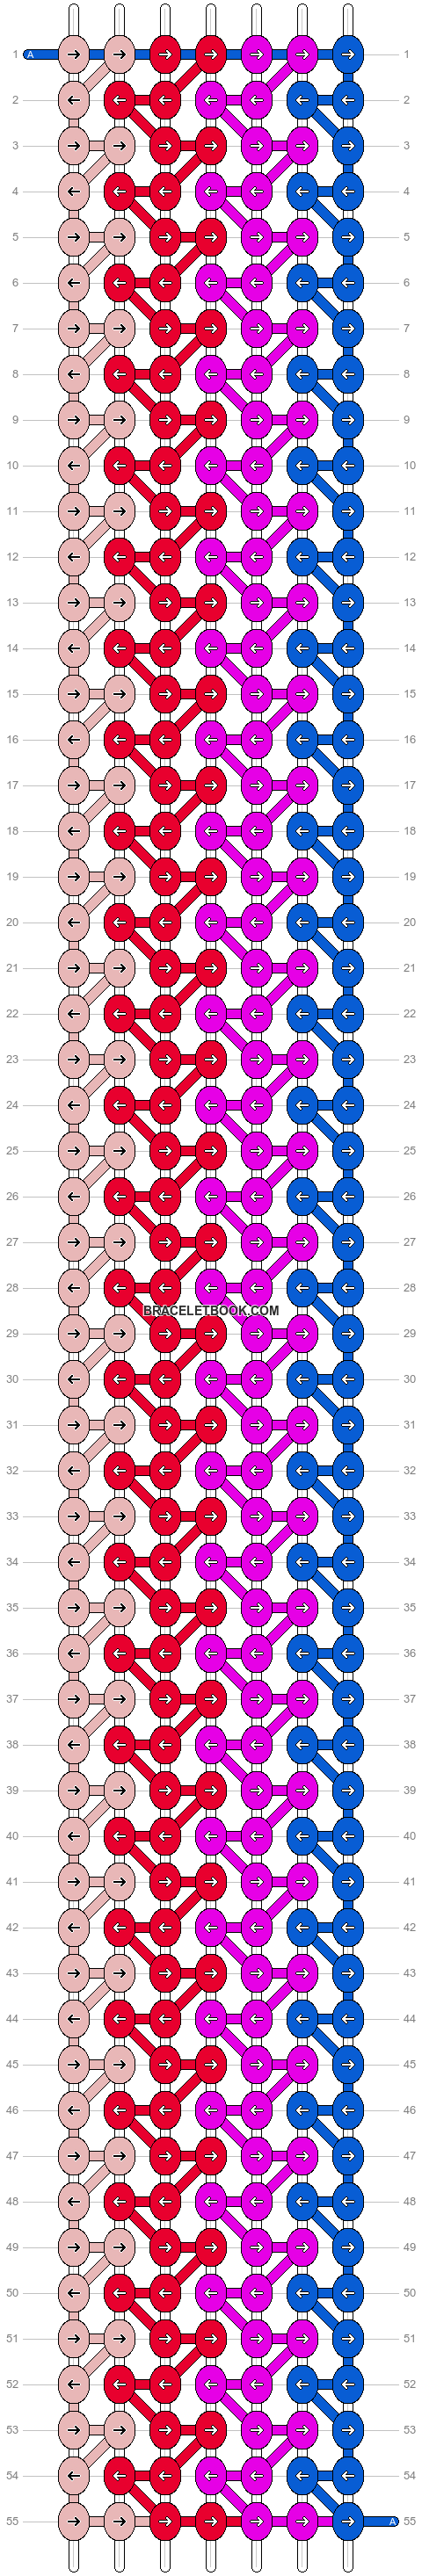 Alpha pattern #15230 variation #20770 pattern